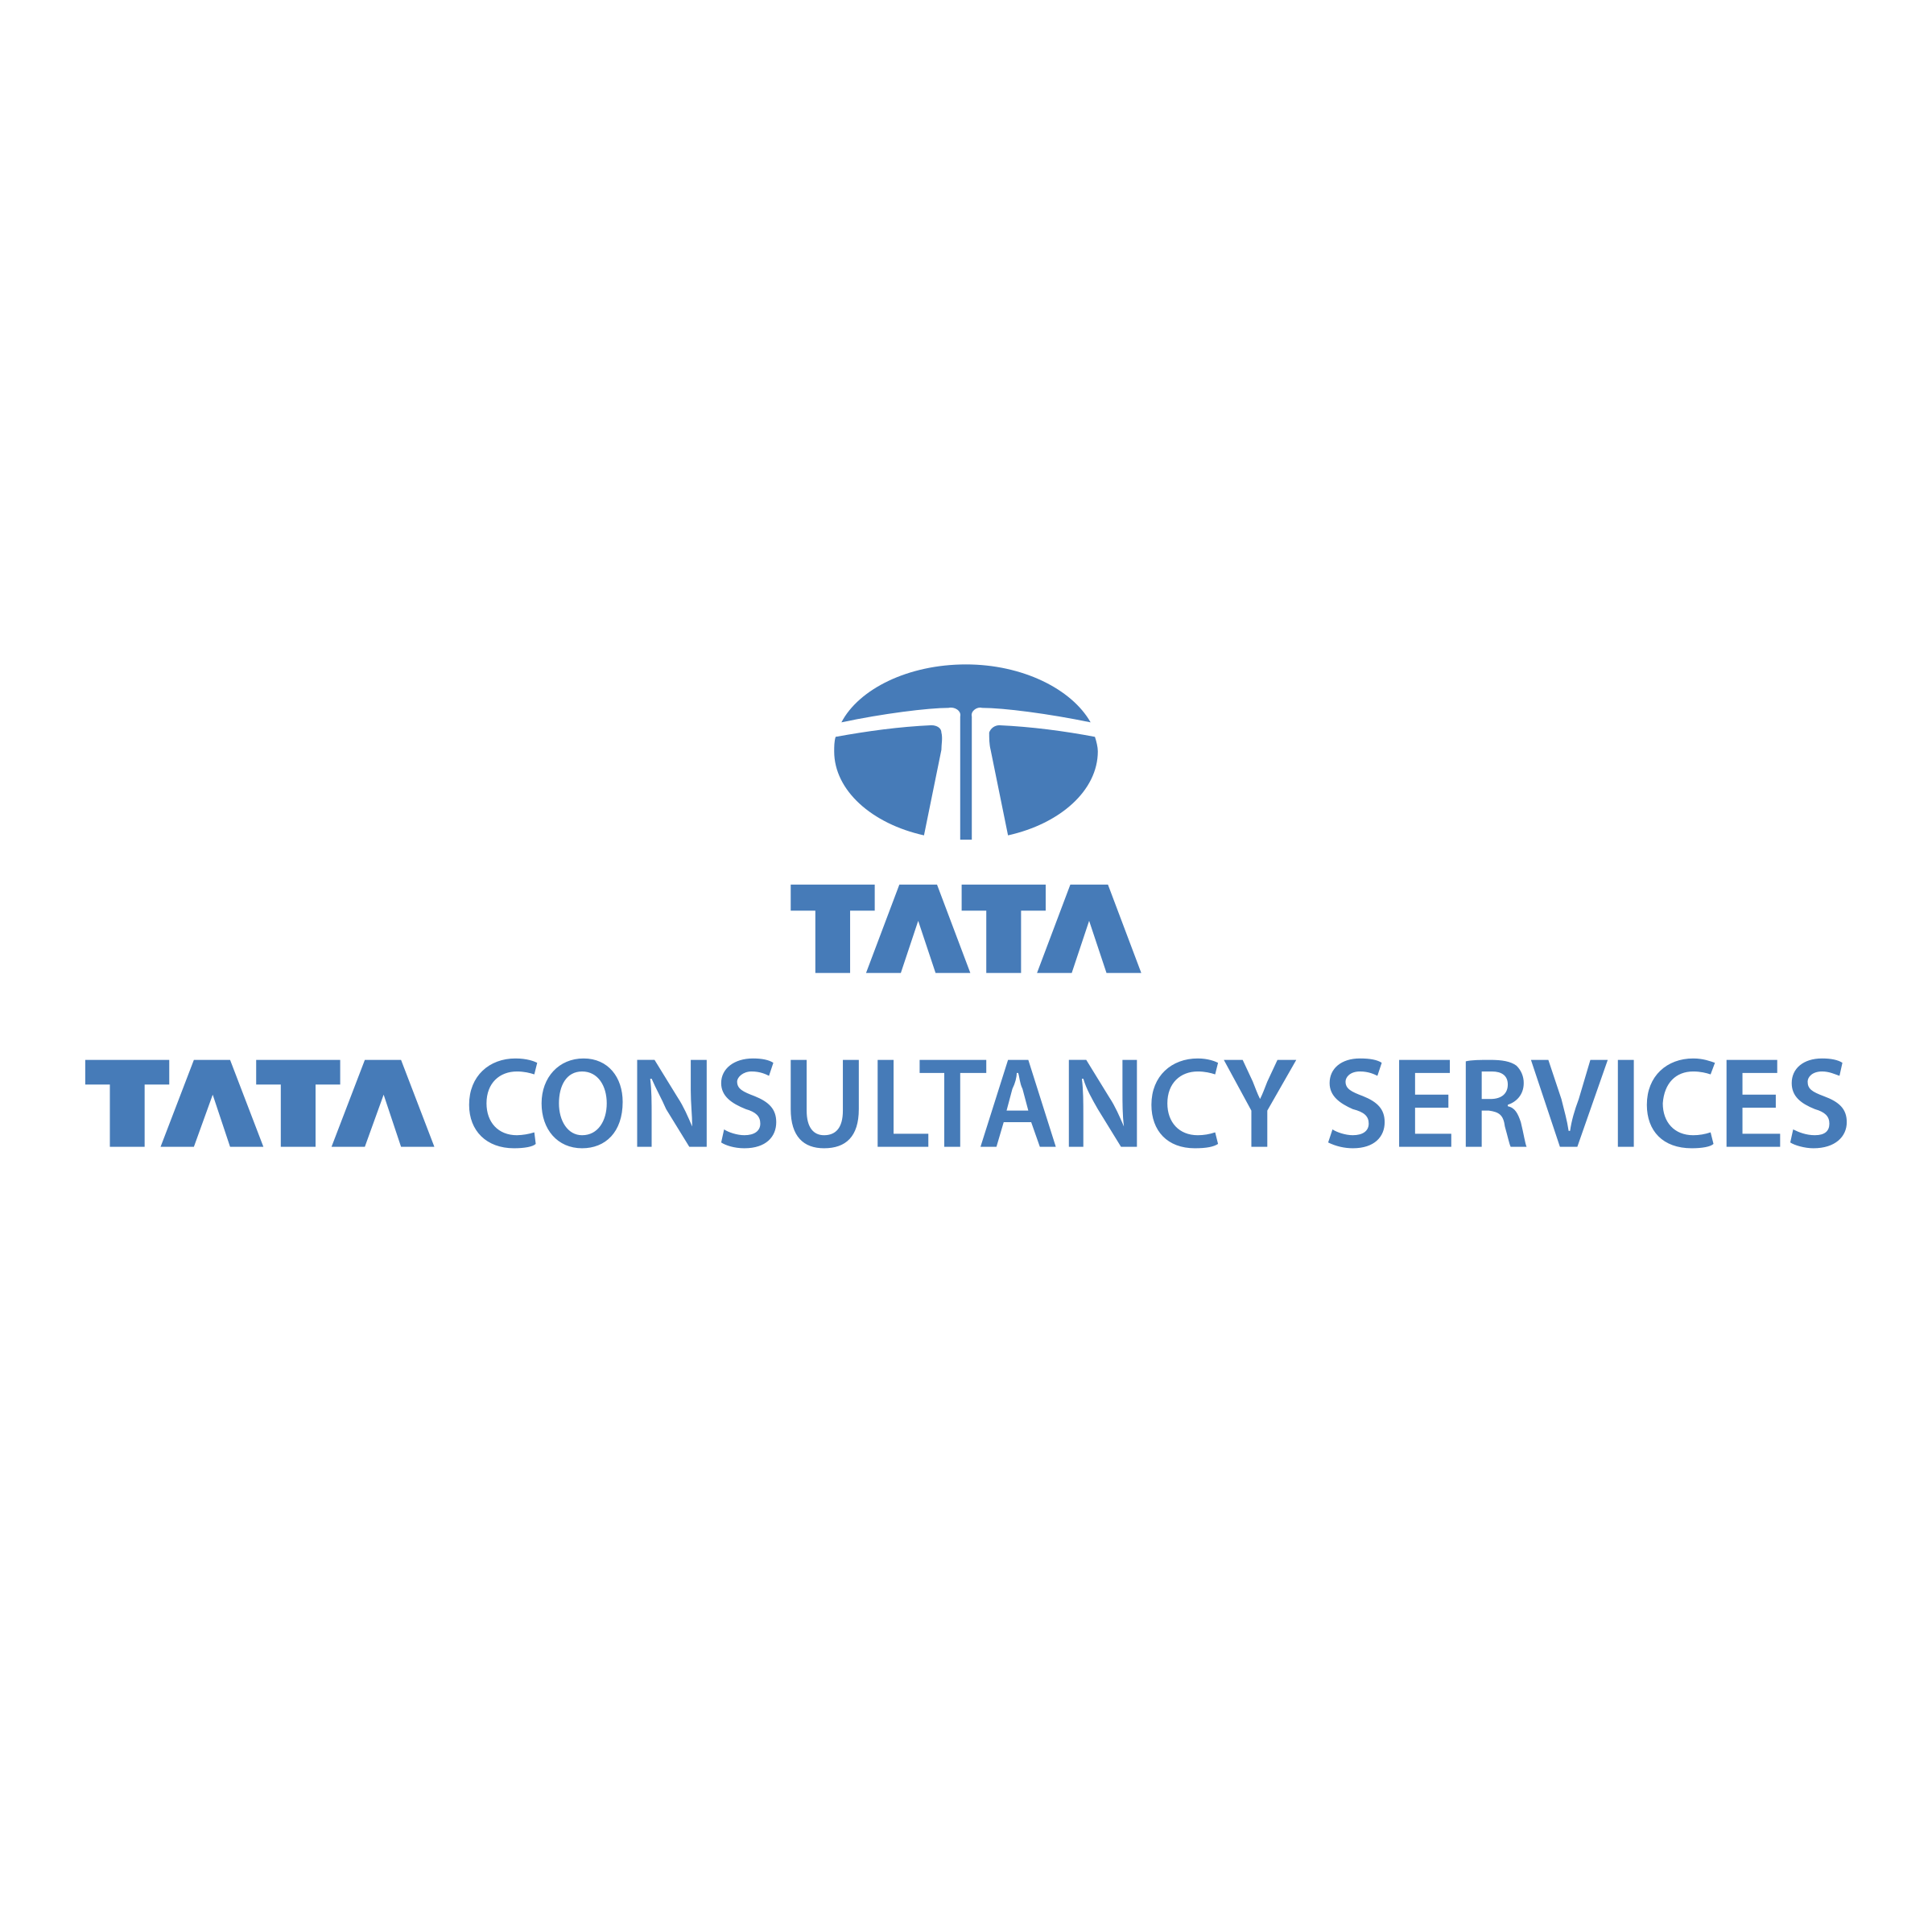 Tata Consultancy Services Logo Png Transparent & Svg Vector Pluspng.com  - Tata, Transparent background PNG HD thumbnail